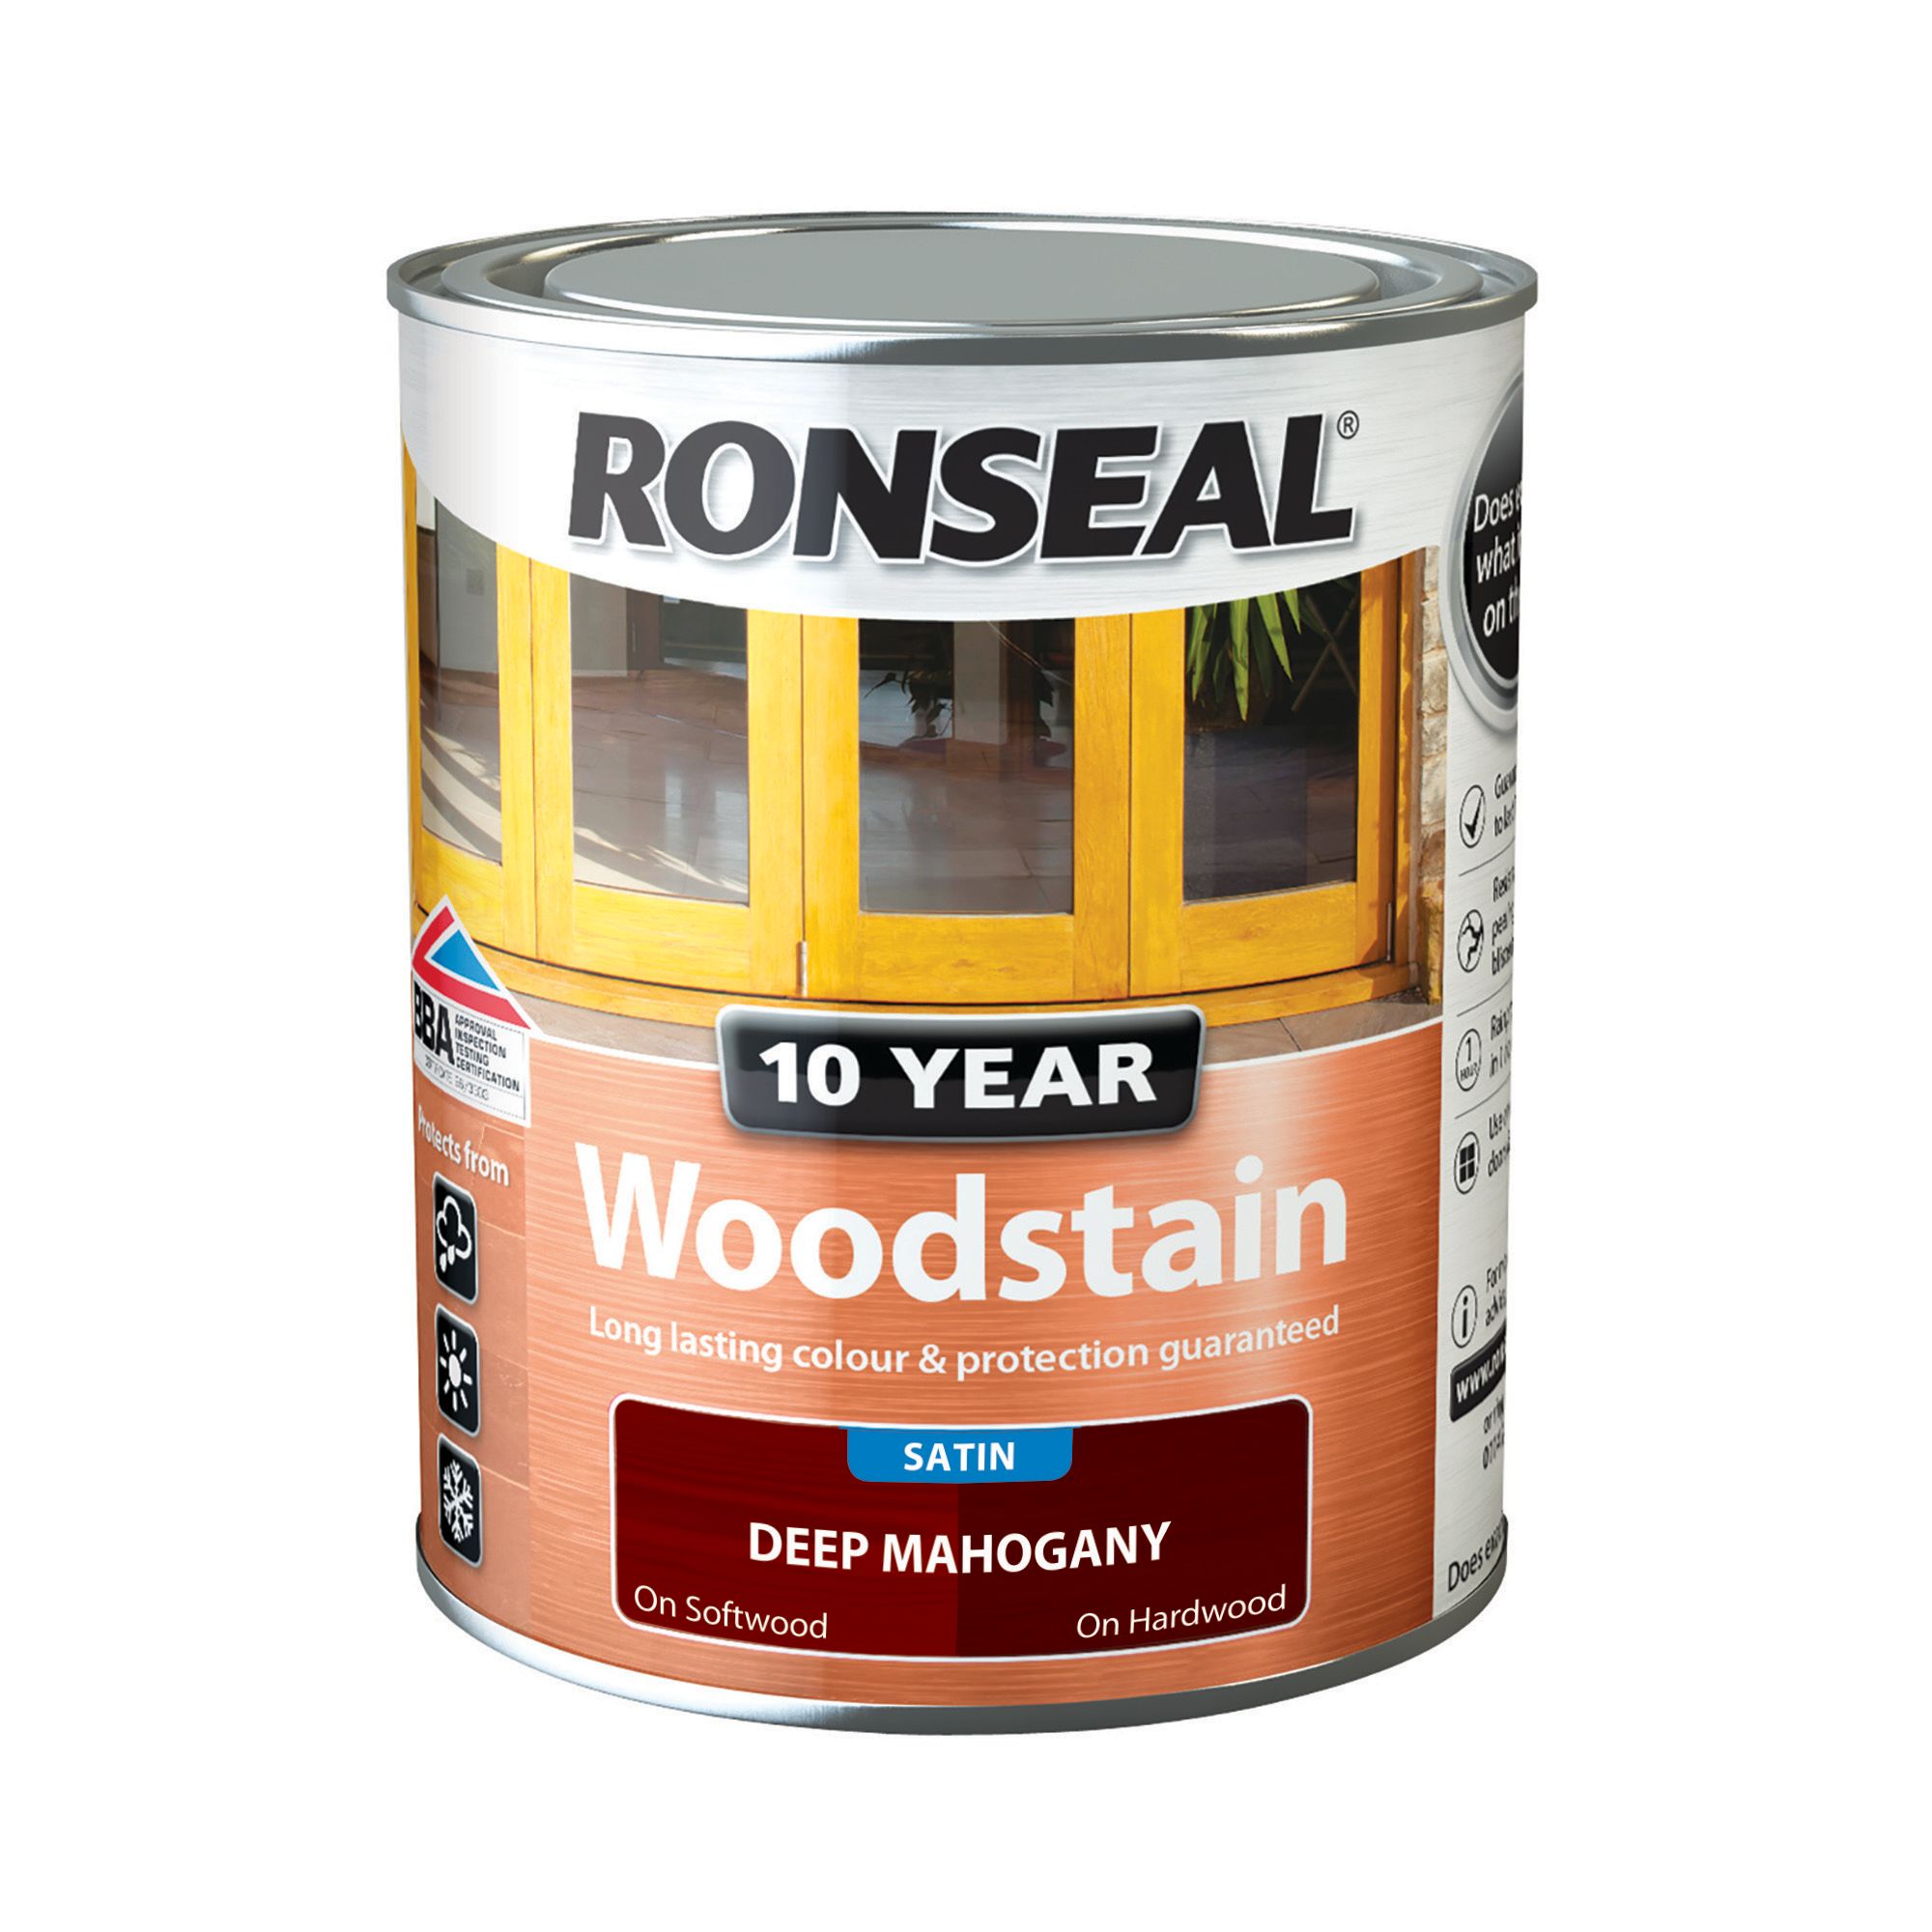 Ronseal 10 Year Woodstain - Deep Mahogany 750ml